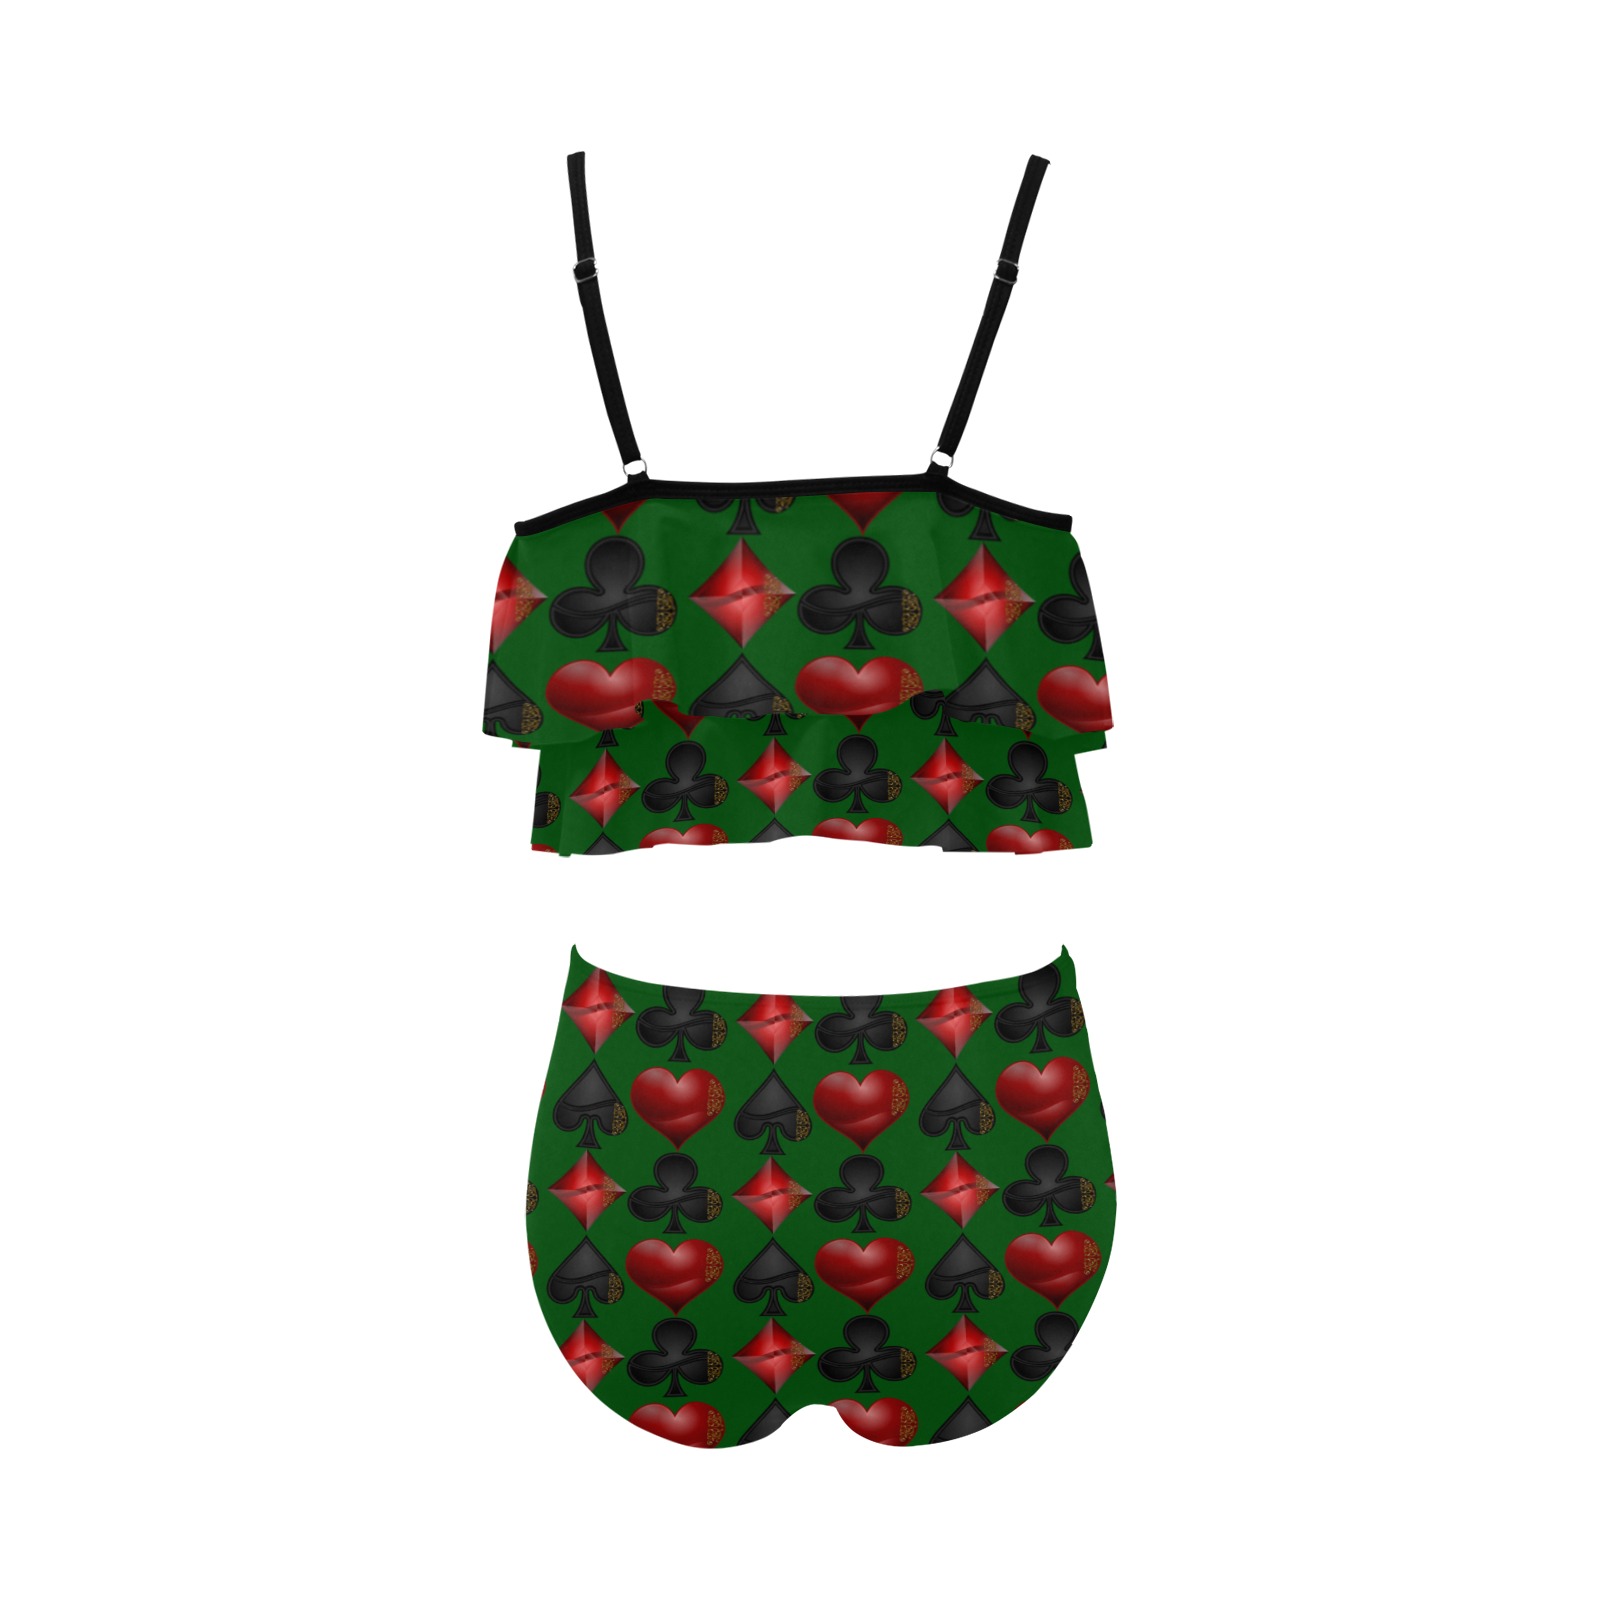 Las Vegas Black and Red Card Shapes Green High Waisted Double Ruffle Bikini Set (Model S34)